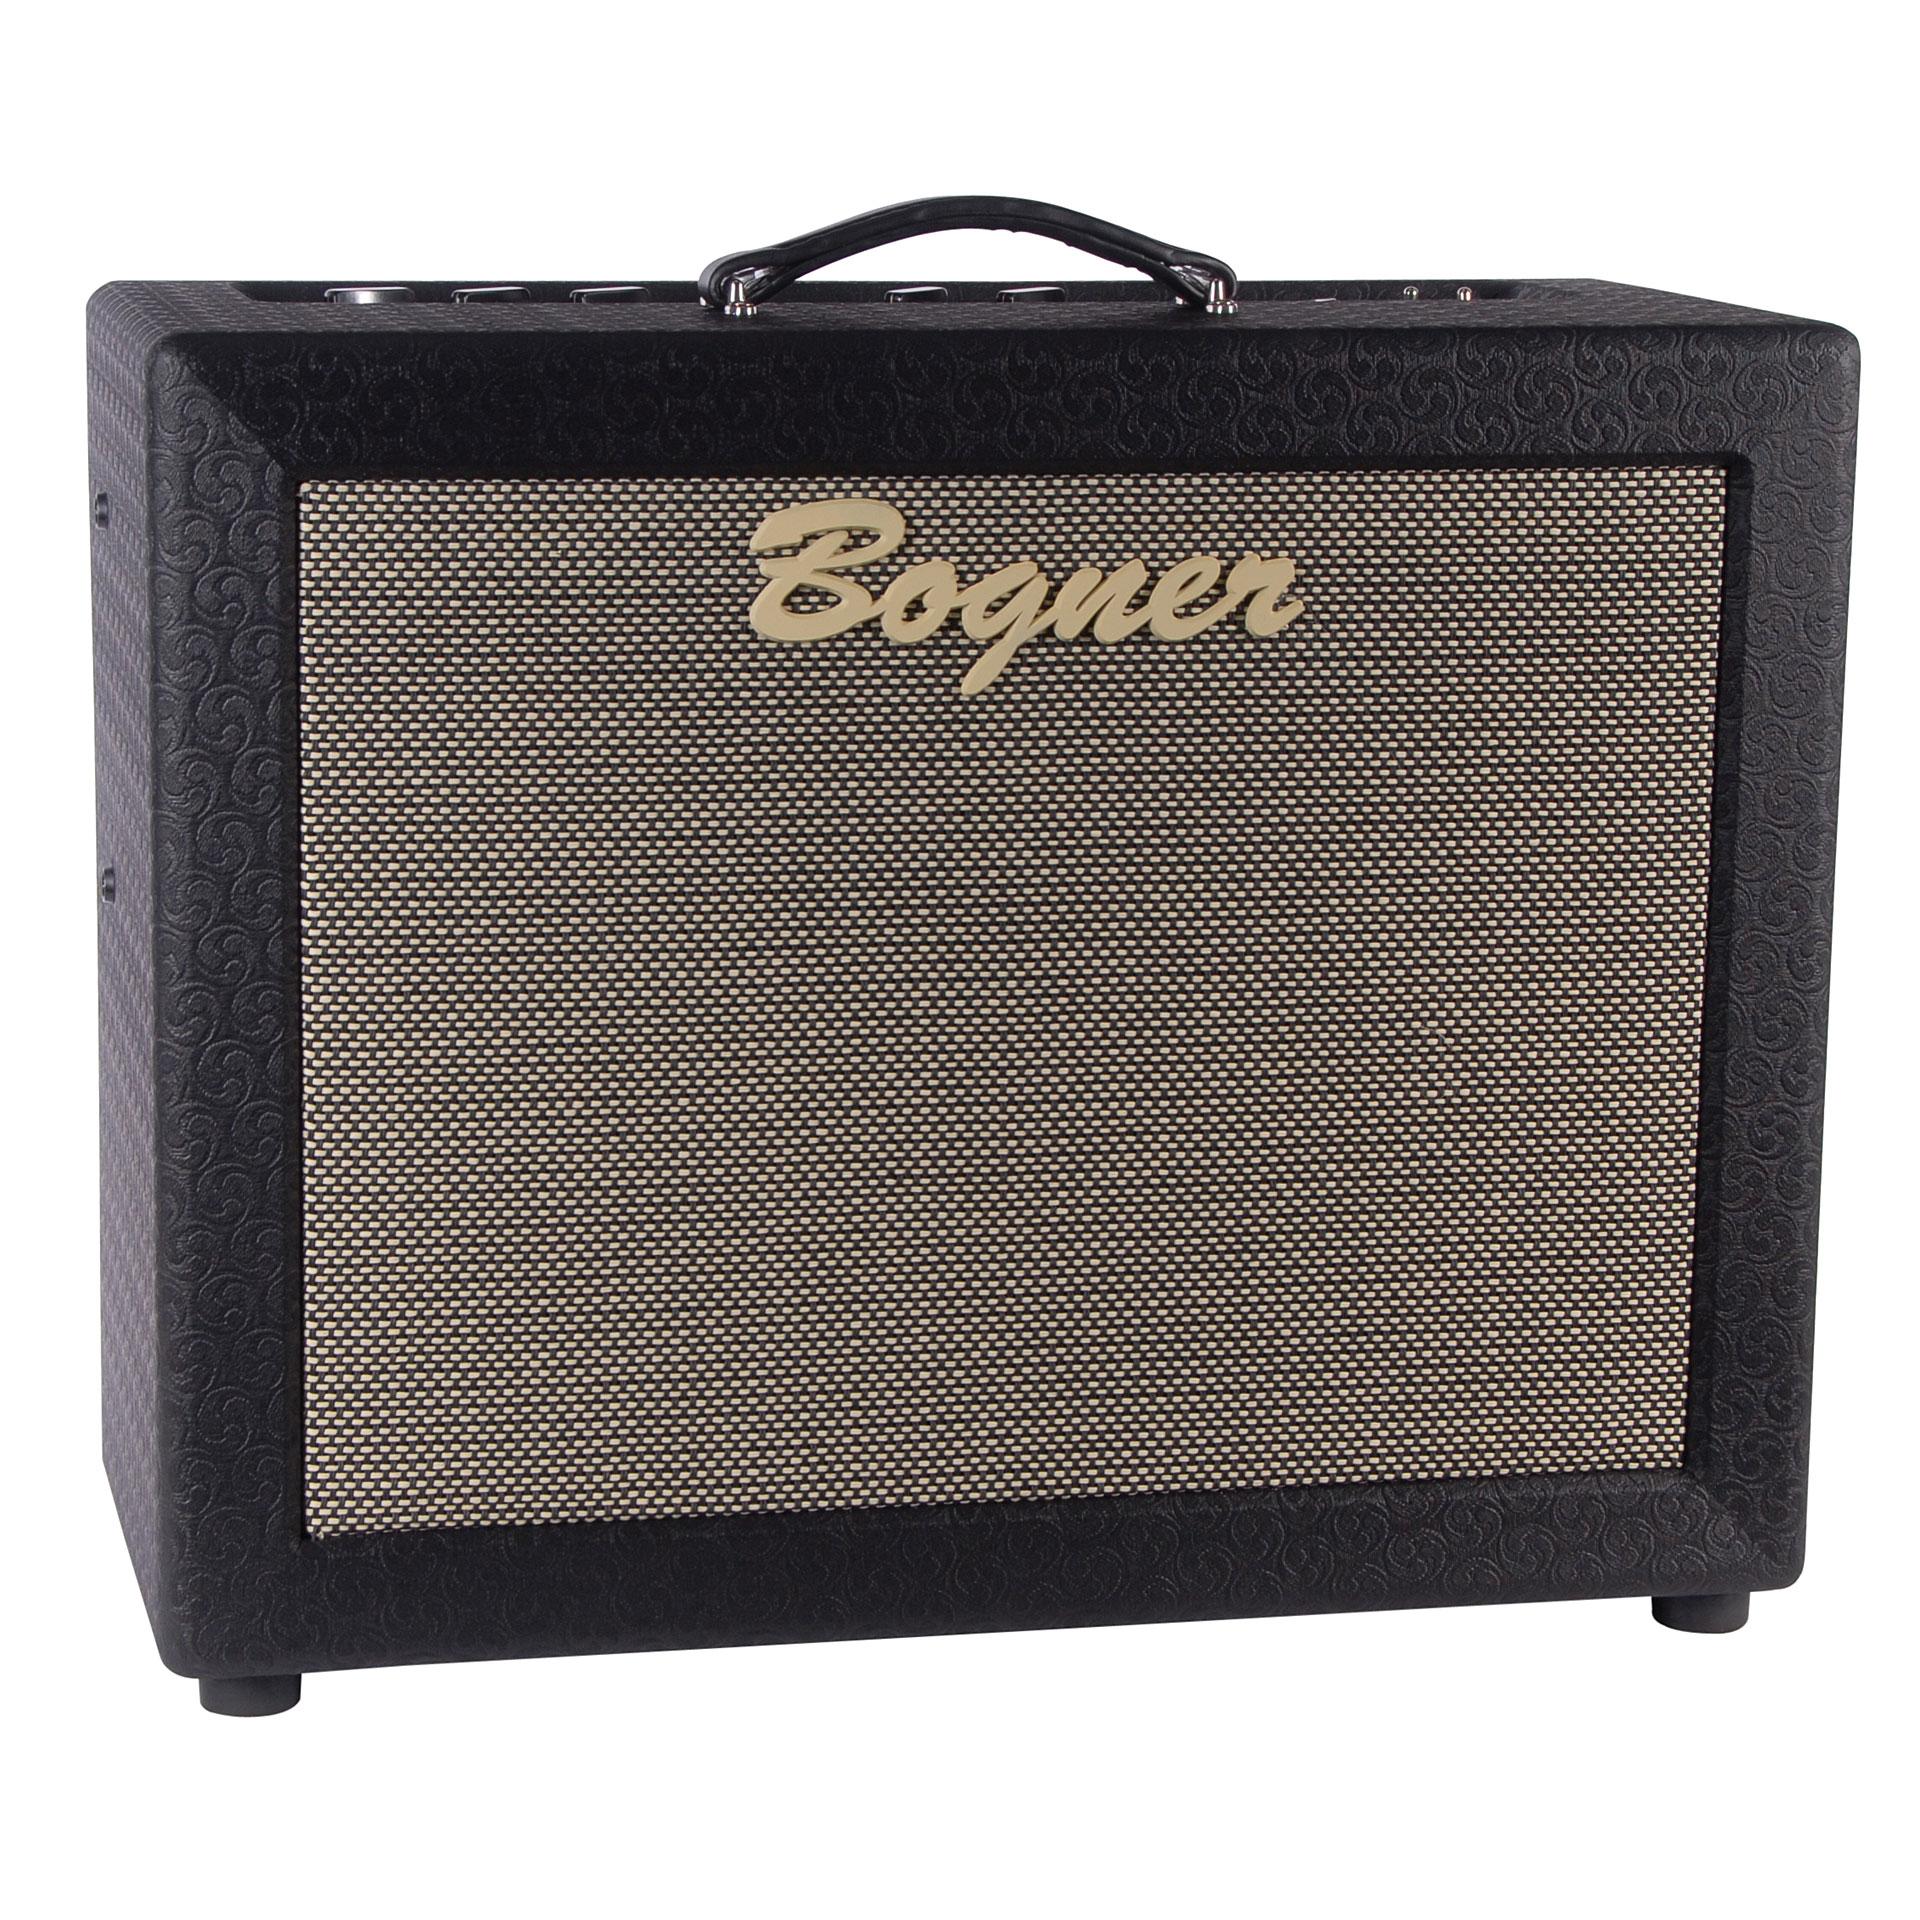 Foto Bogner Goldfinger 45, Amplificador guitarra eléctrica